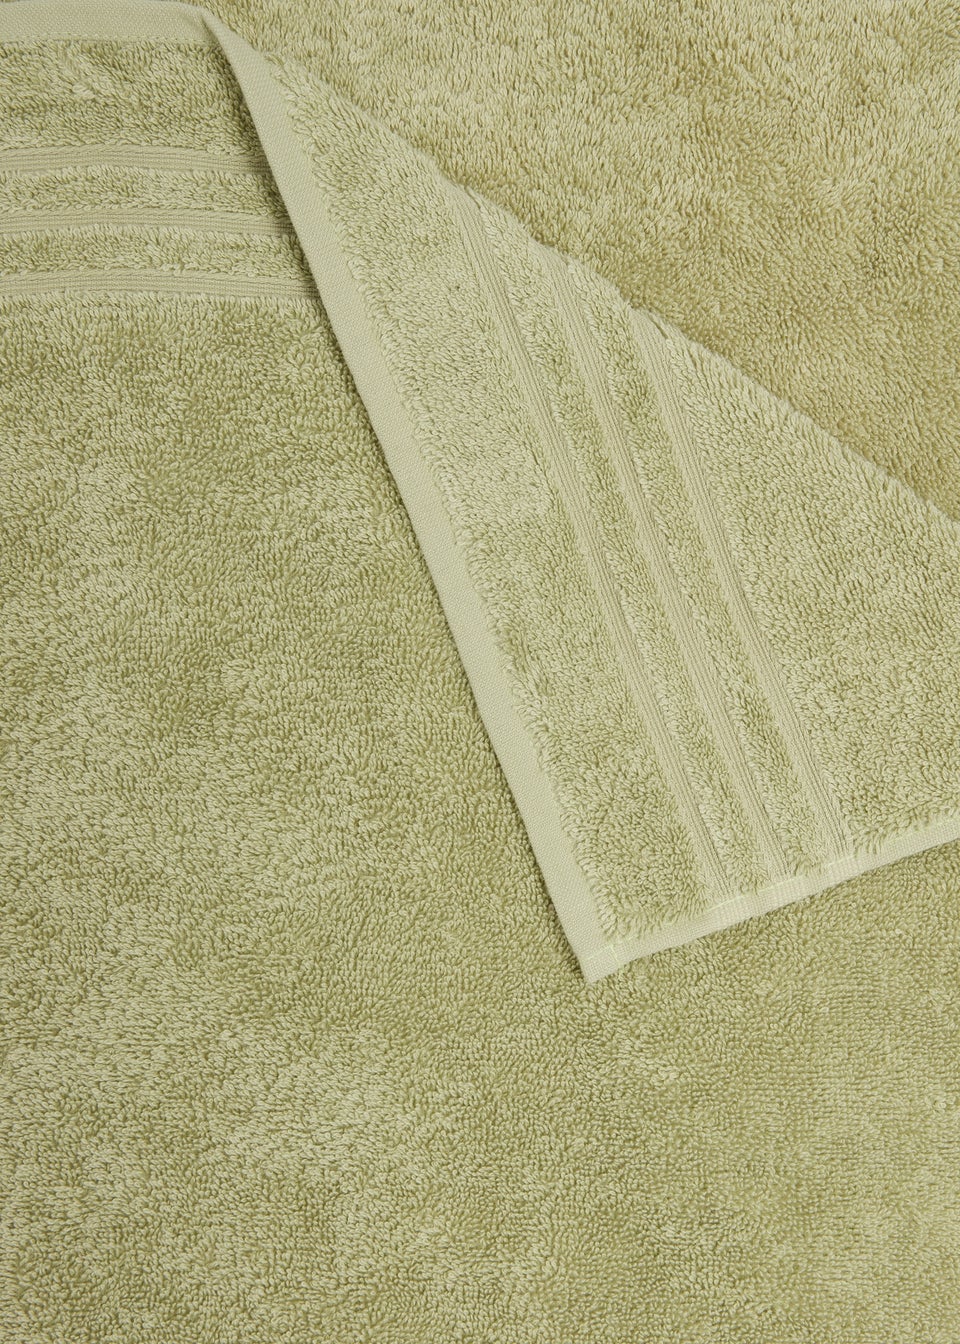 Green 100% Cotton Egyptian Towel